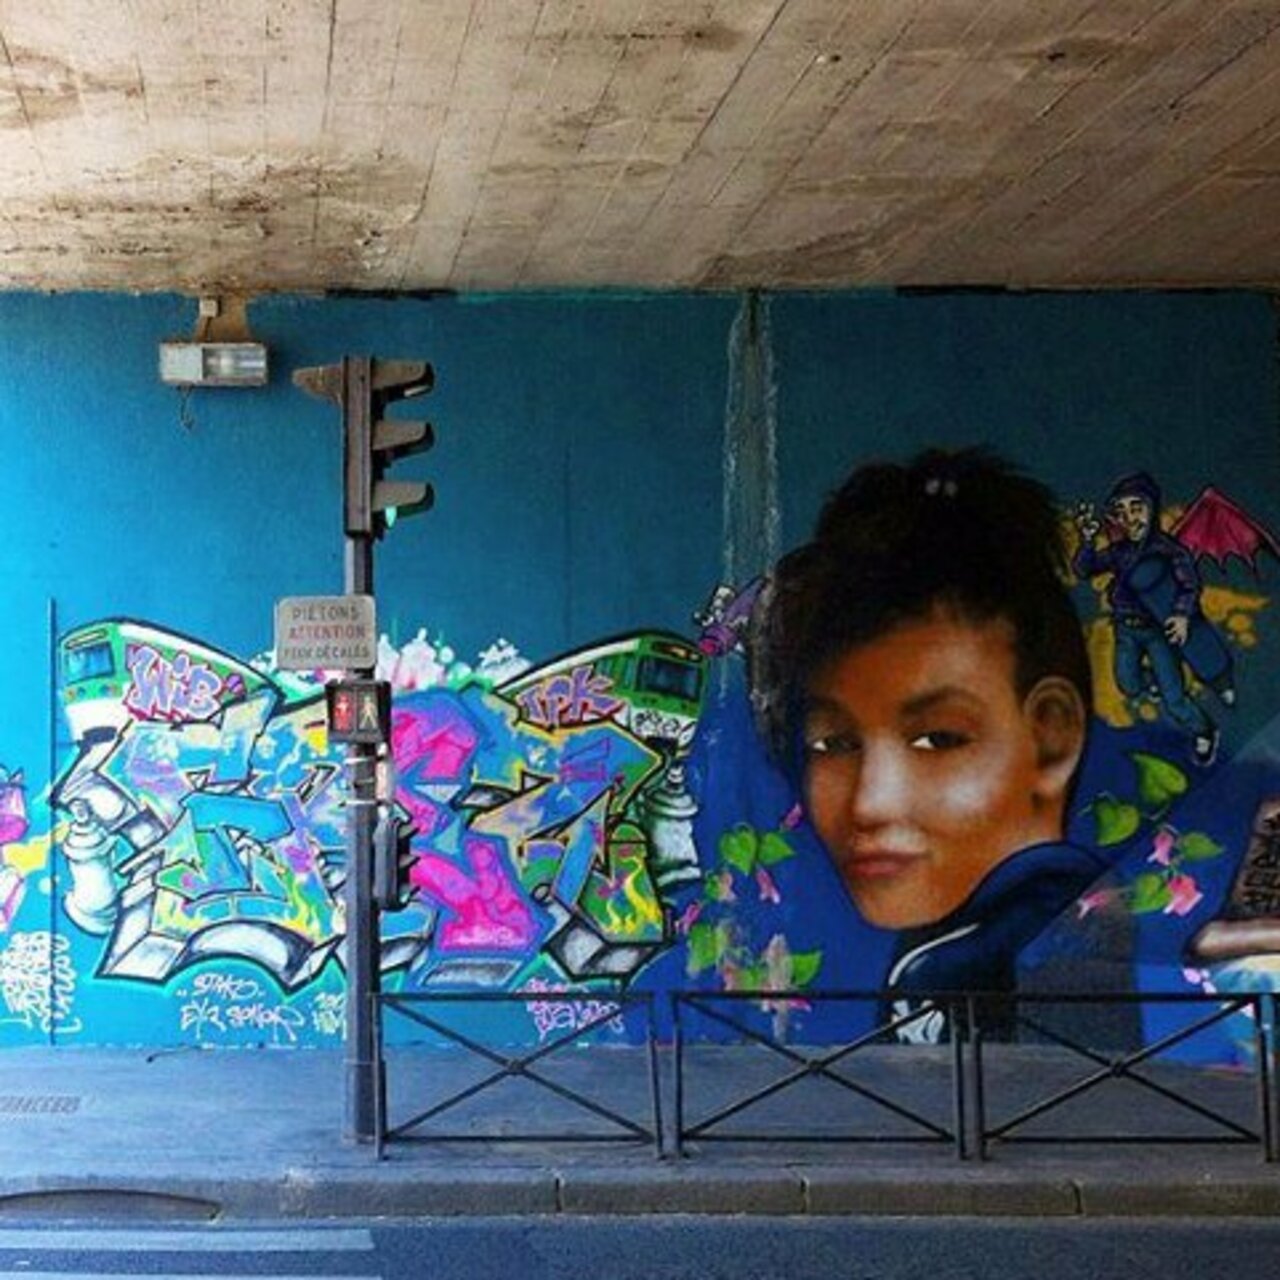 #streetart #streetarteverywhere #streetshot #graffitiart #graffiti #arturbain #urbanart  #mur #mural #wall #wallart… https://t.co/HSNFKZx4tb